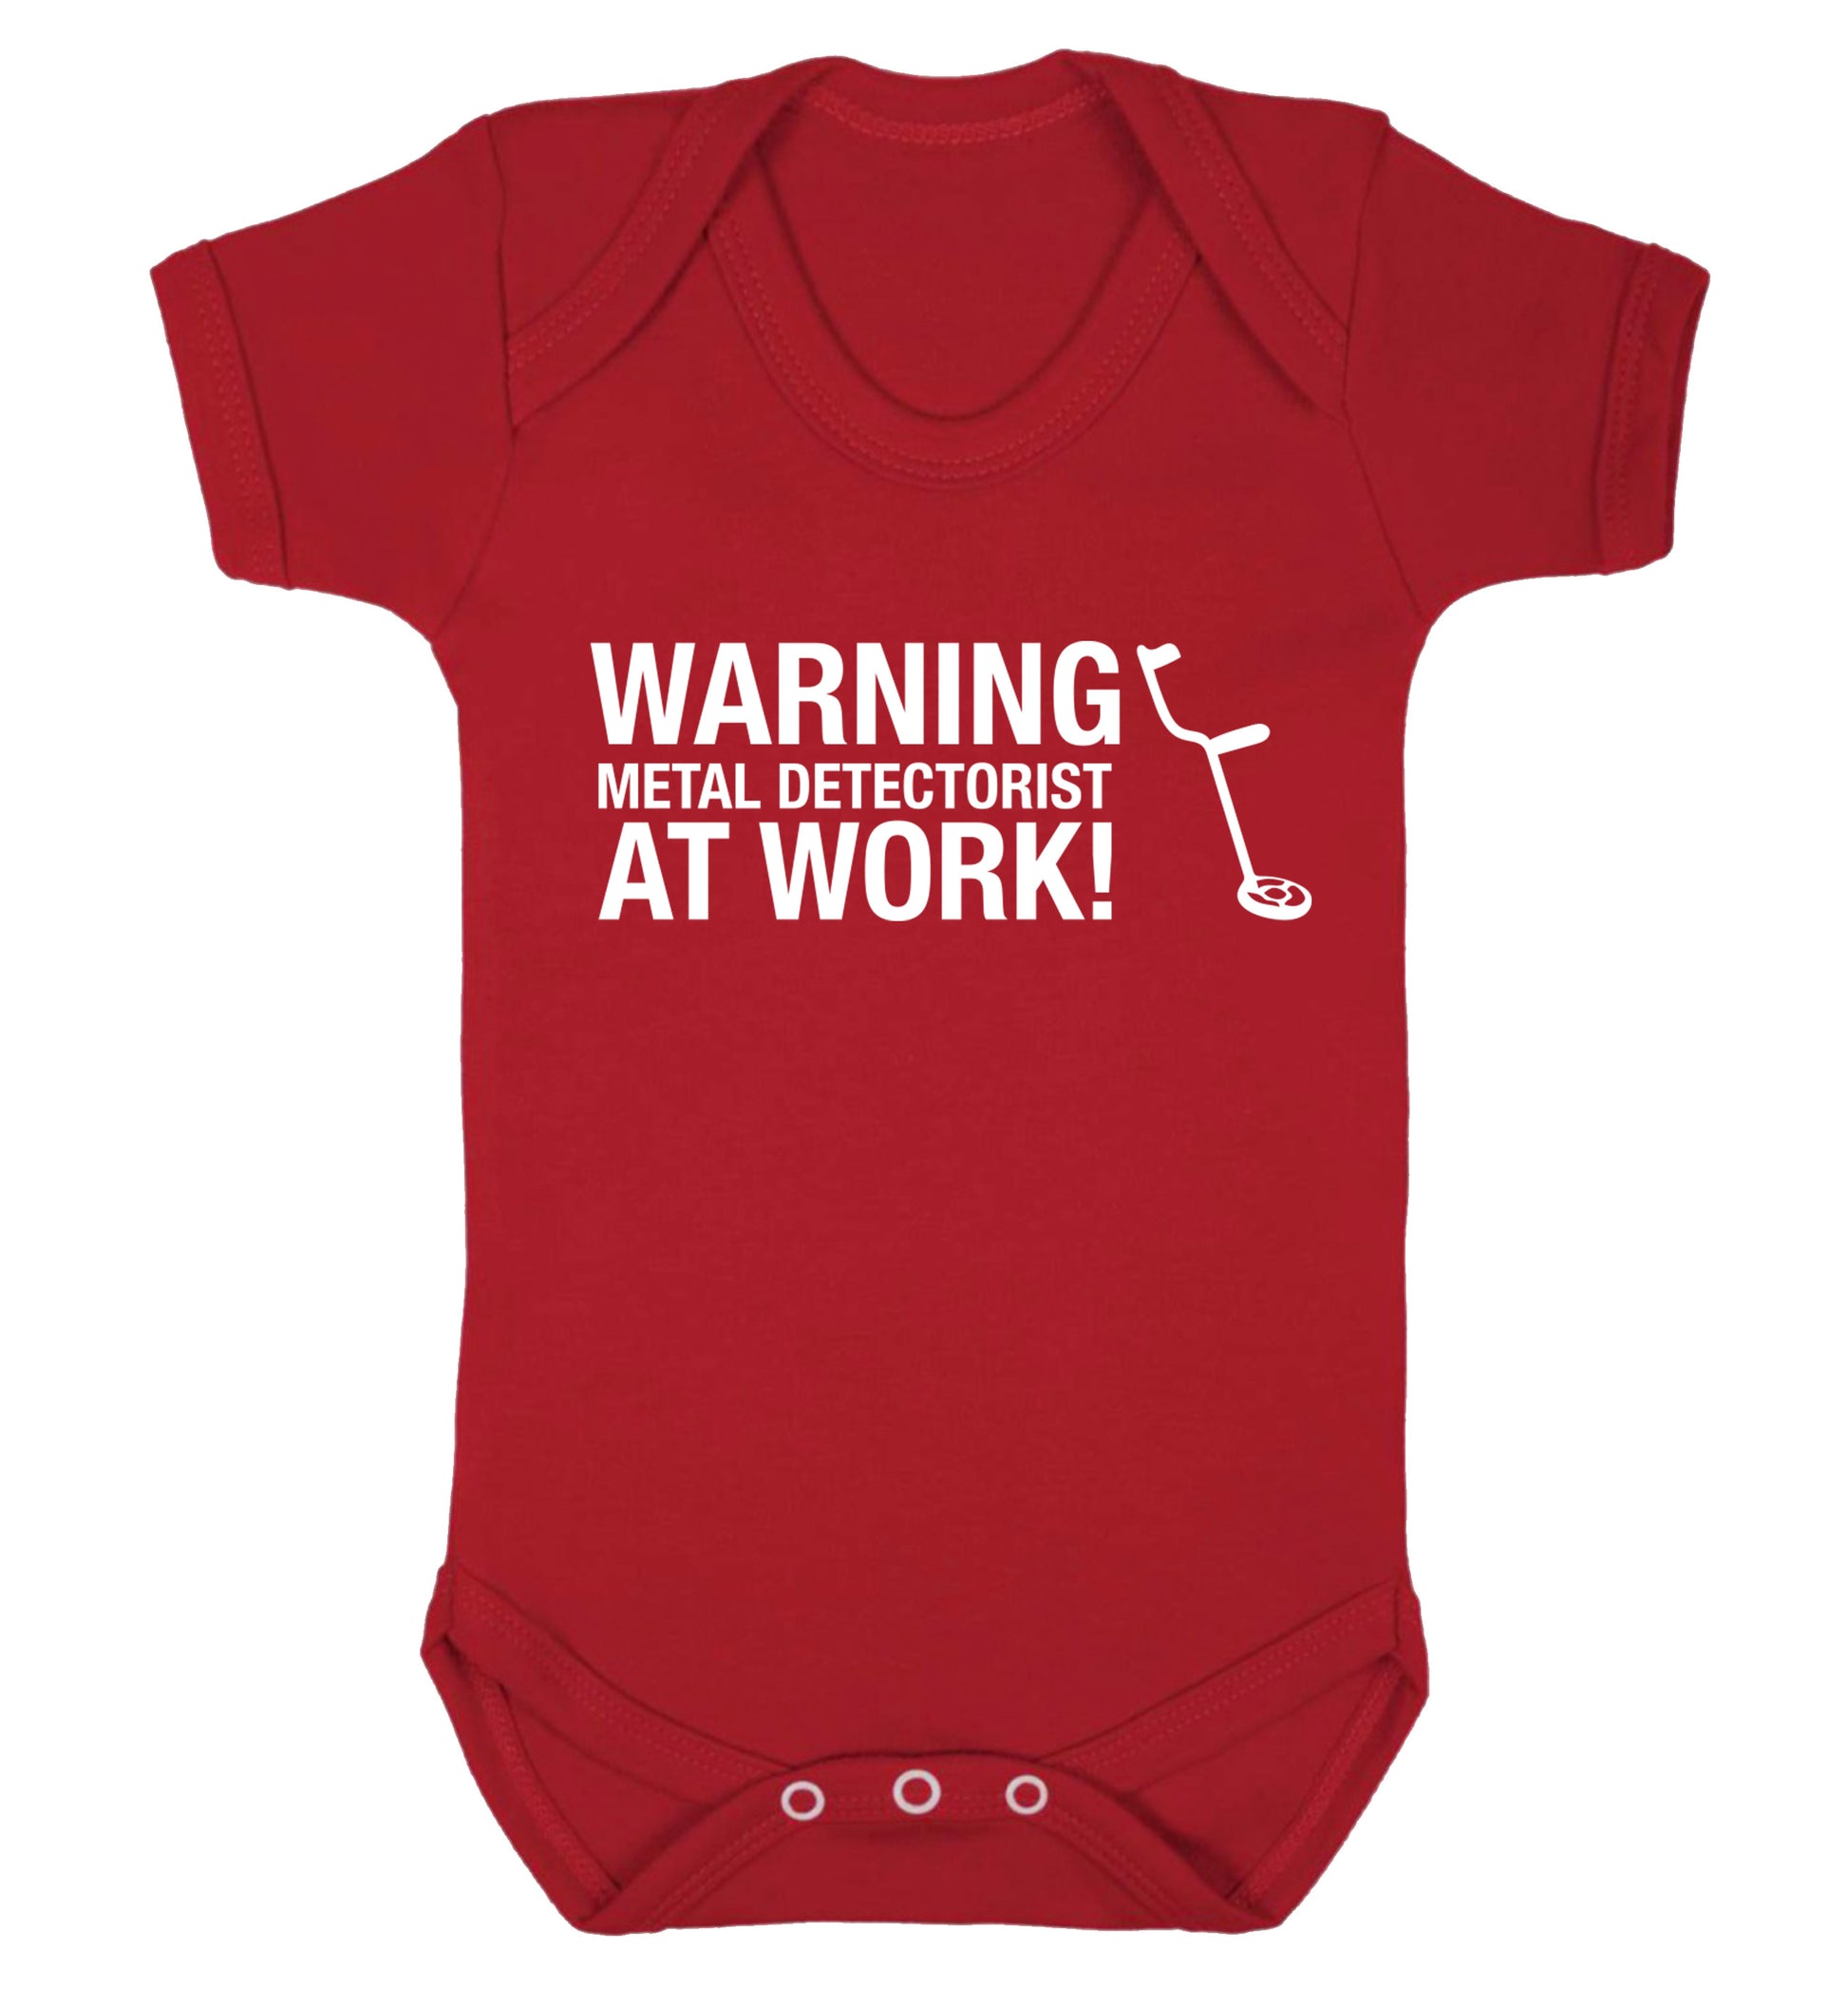 Warning metal detectorist at work! Baby Vest red 18-24 months